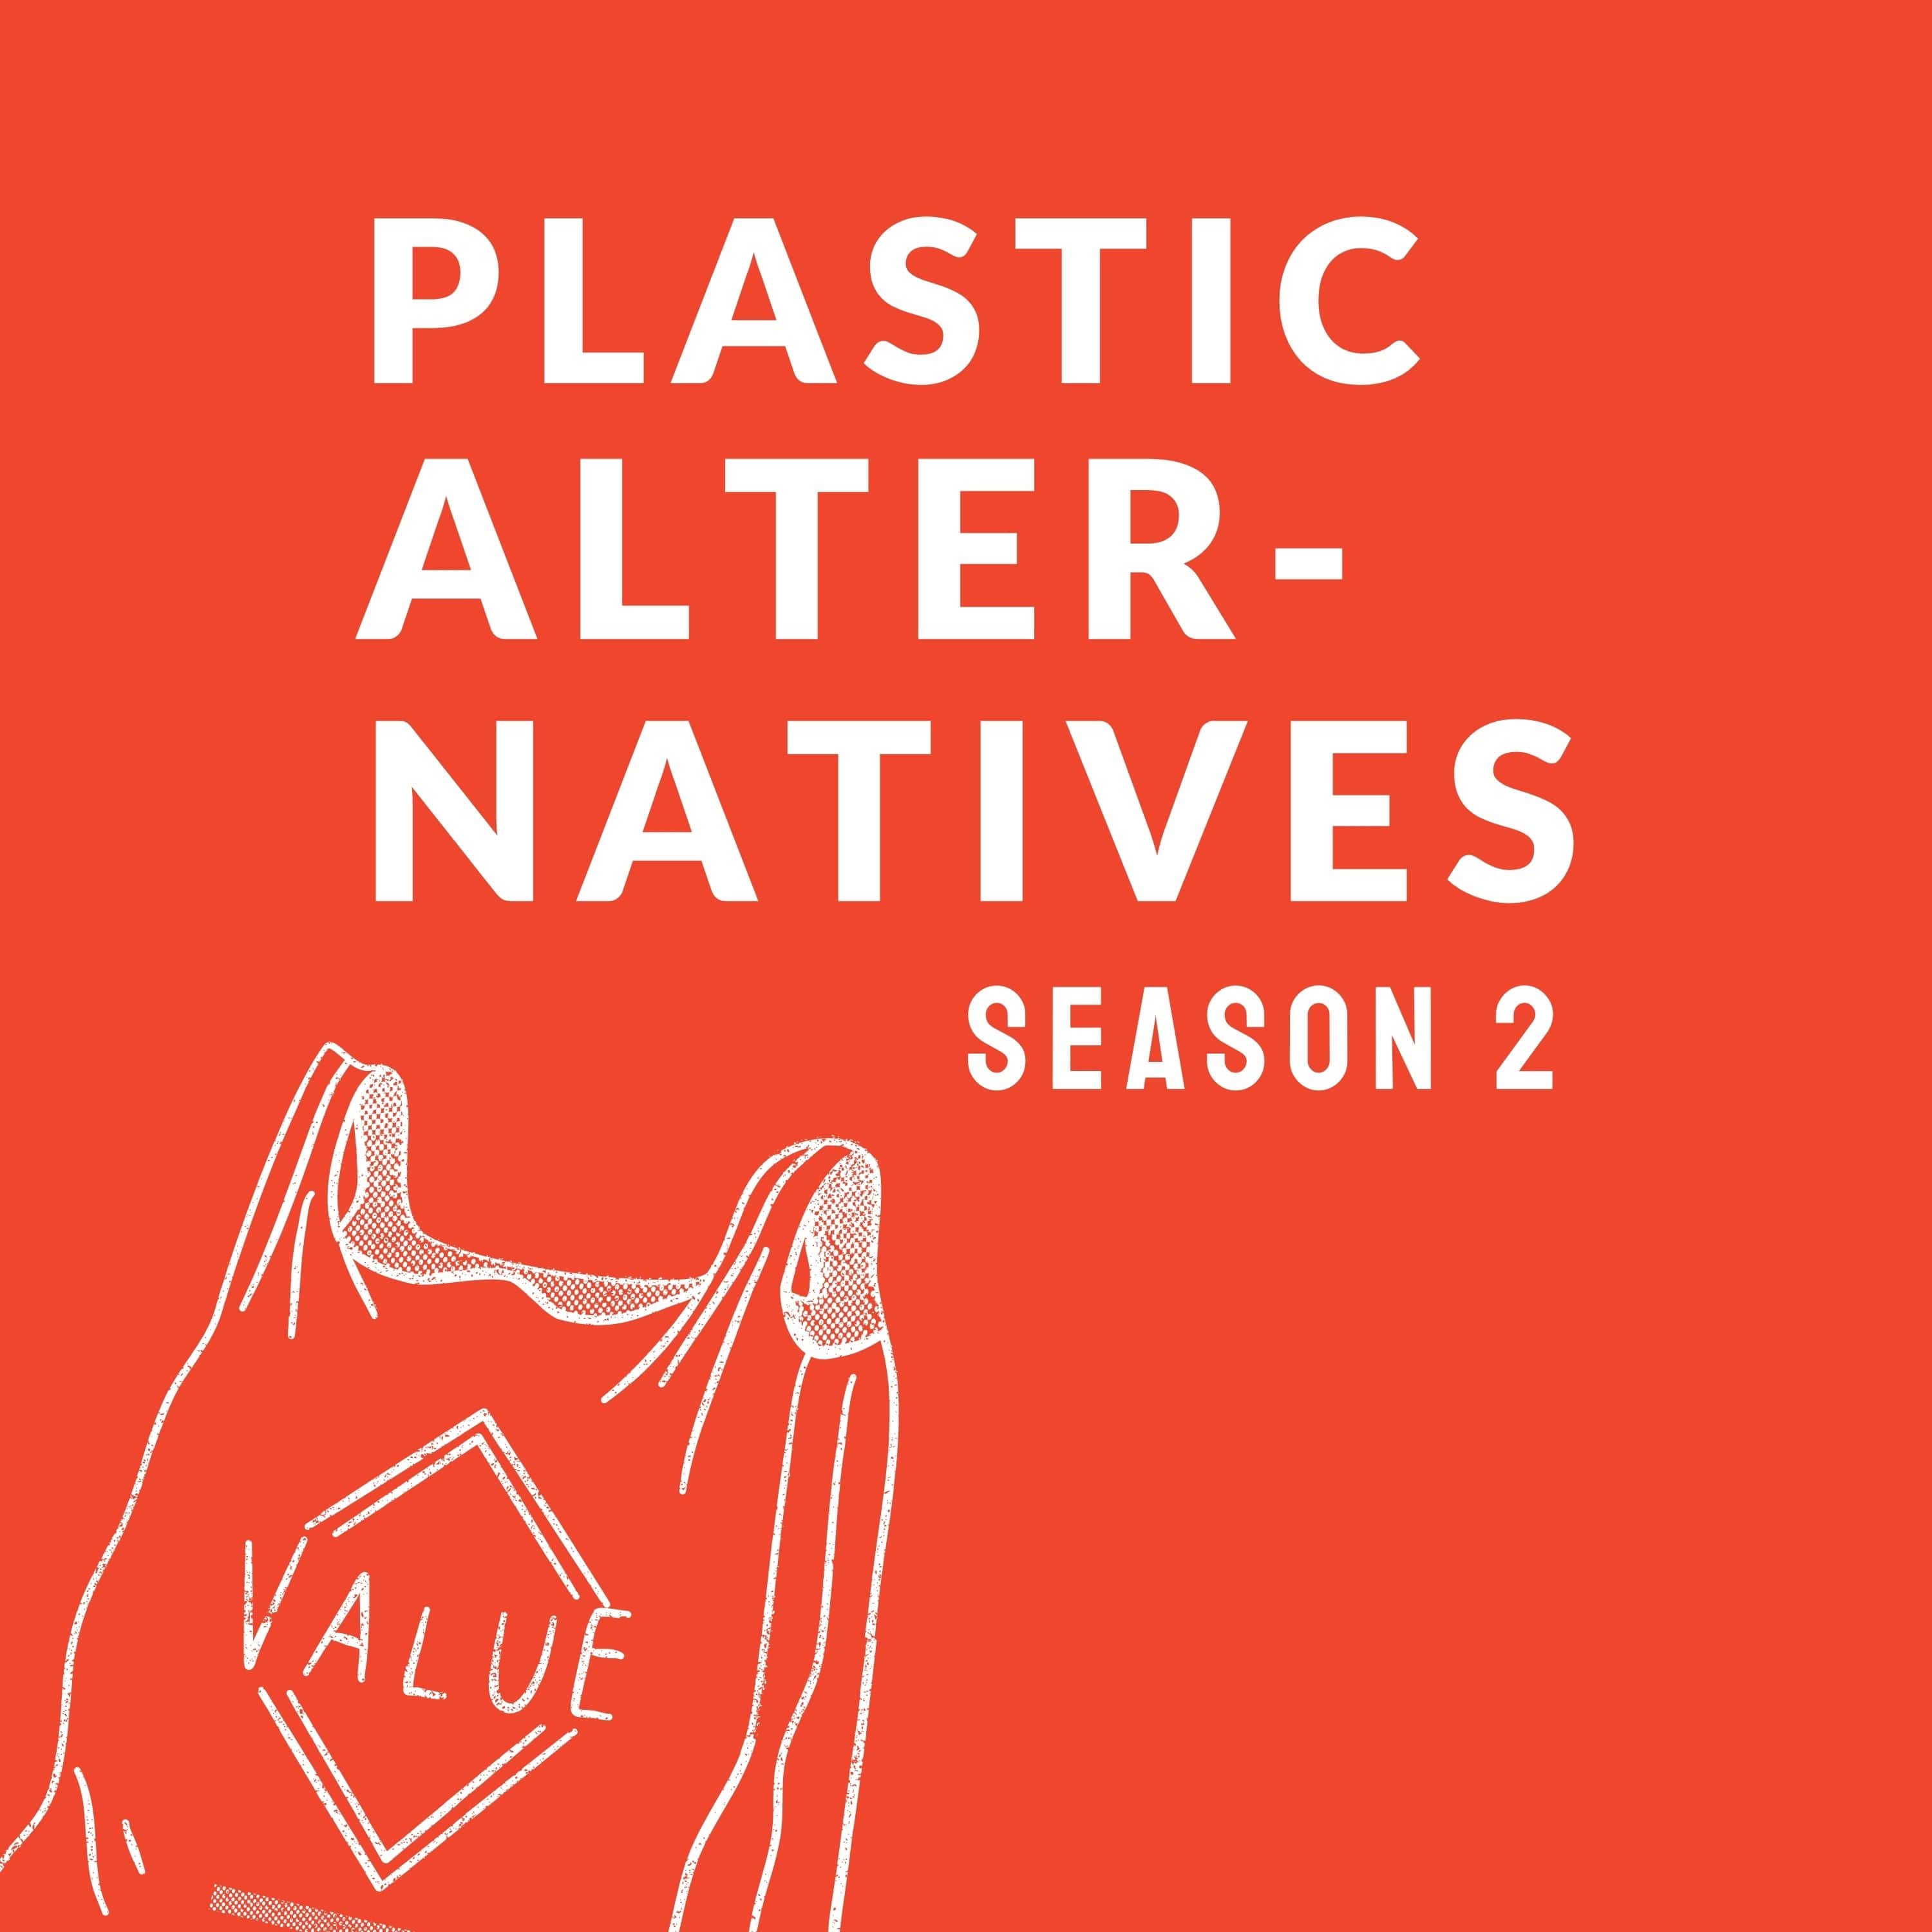 plastic packaging podcast, plastic alternatives podcast, food packaging podcast, biodegradable podcast, industrial composting podcast, biobased plastics podcast